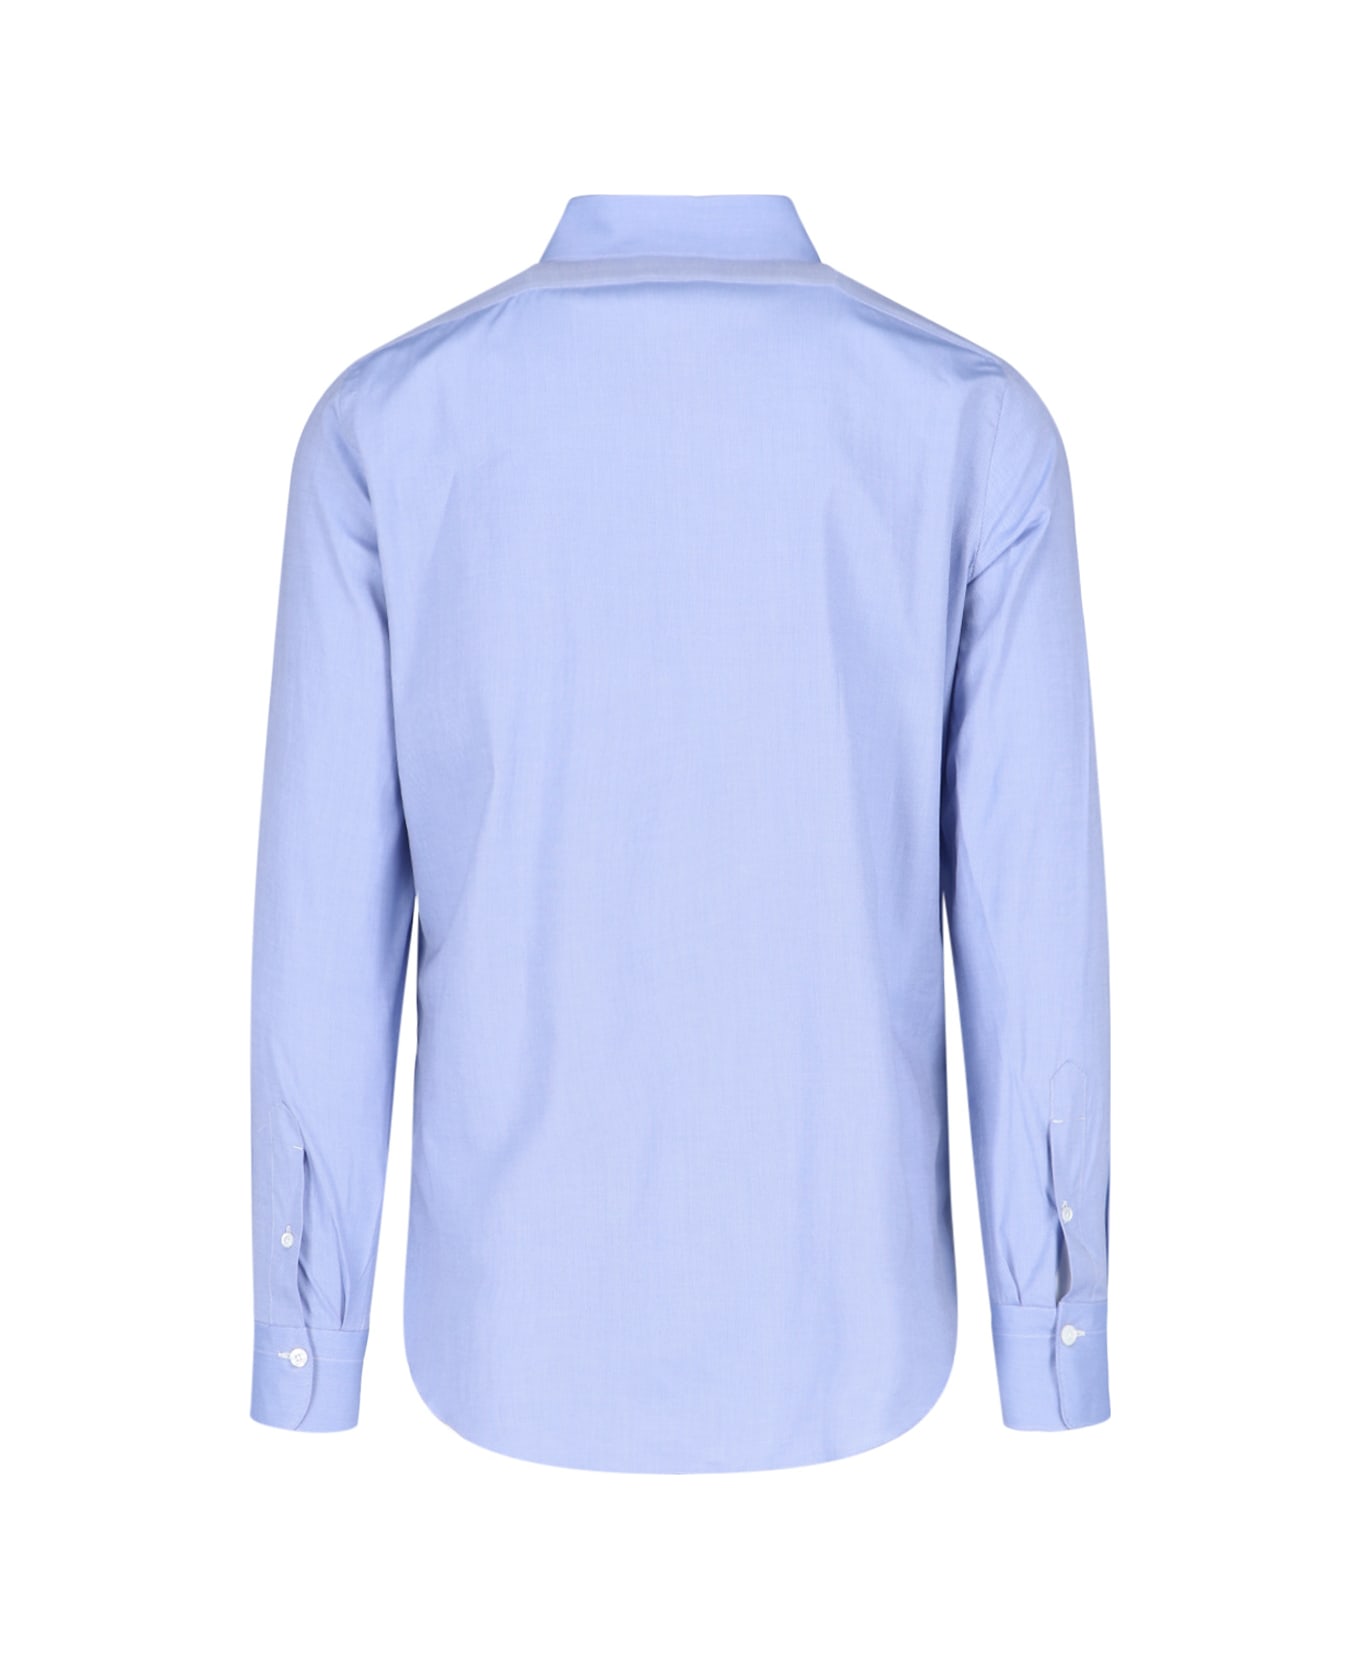 Finamore Classic Shirt - Light Blue